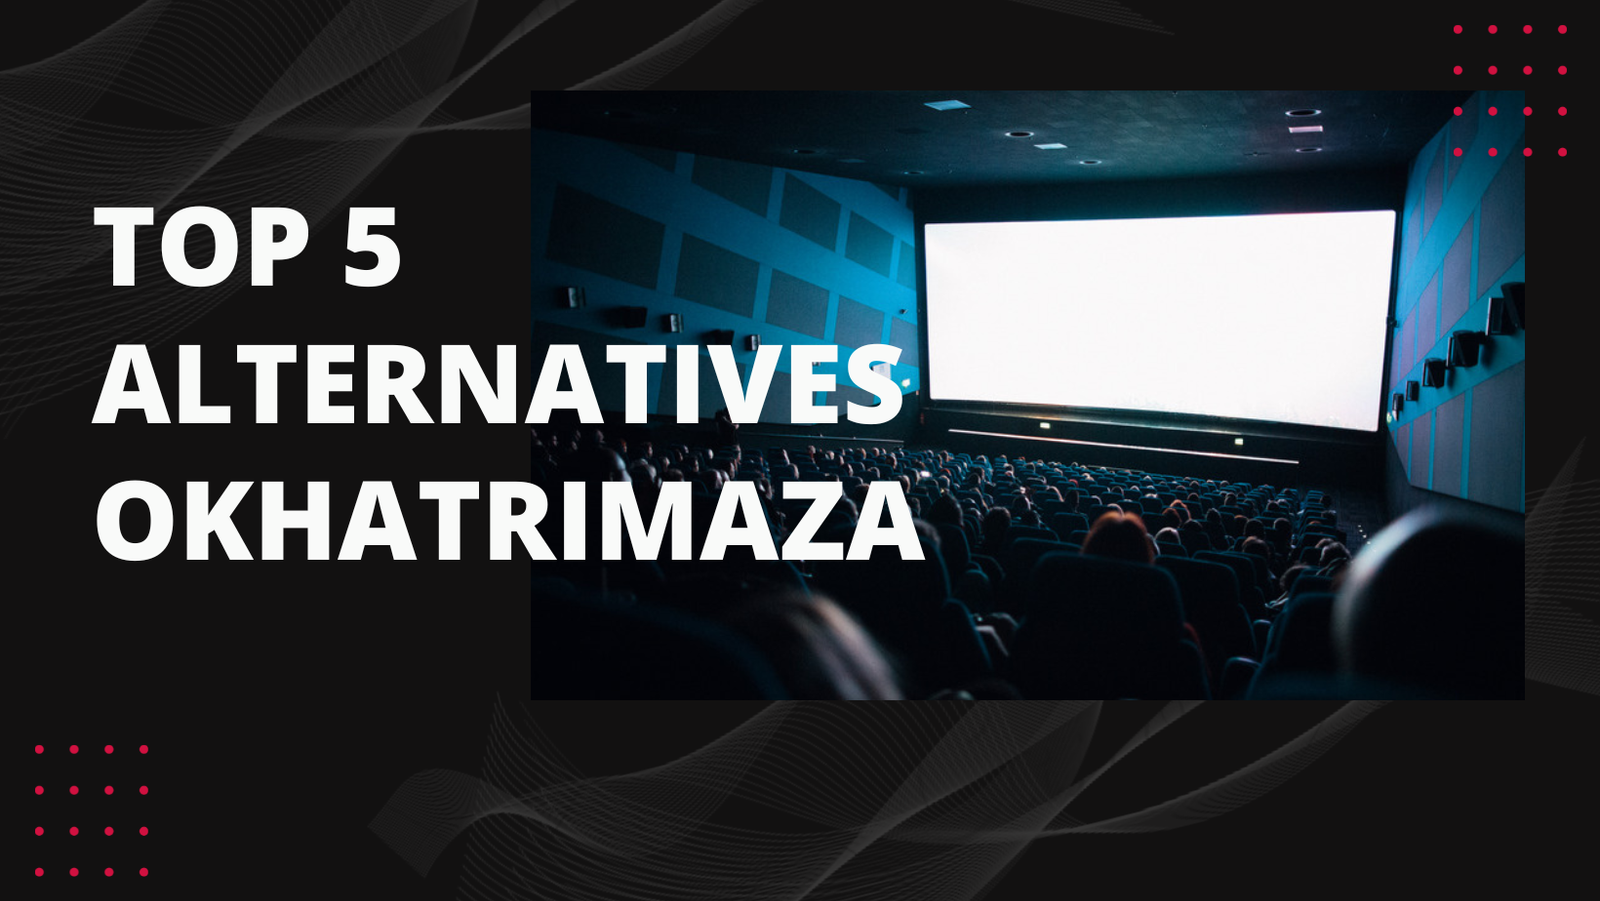 Top 5 Alternatives to Okhatrimaza